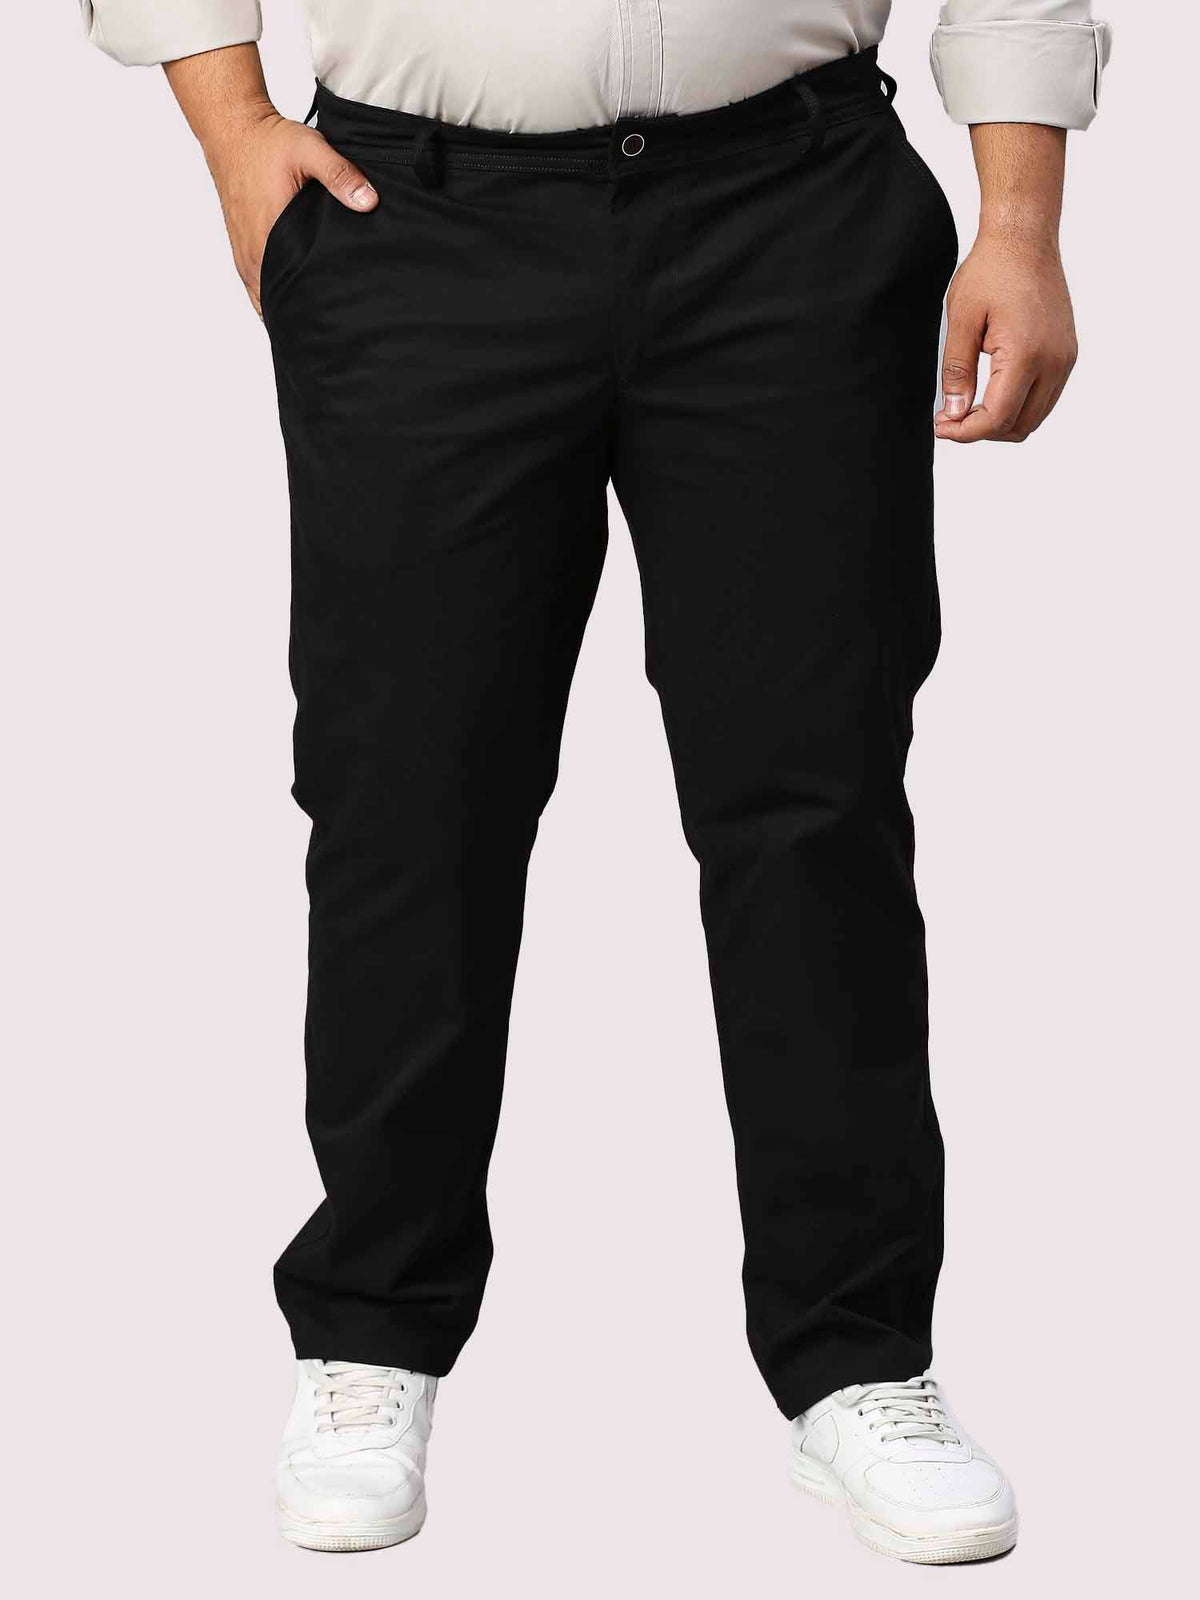 Black Solid Cotton Trouser Men's Plus Size - Guniaa Fashions